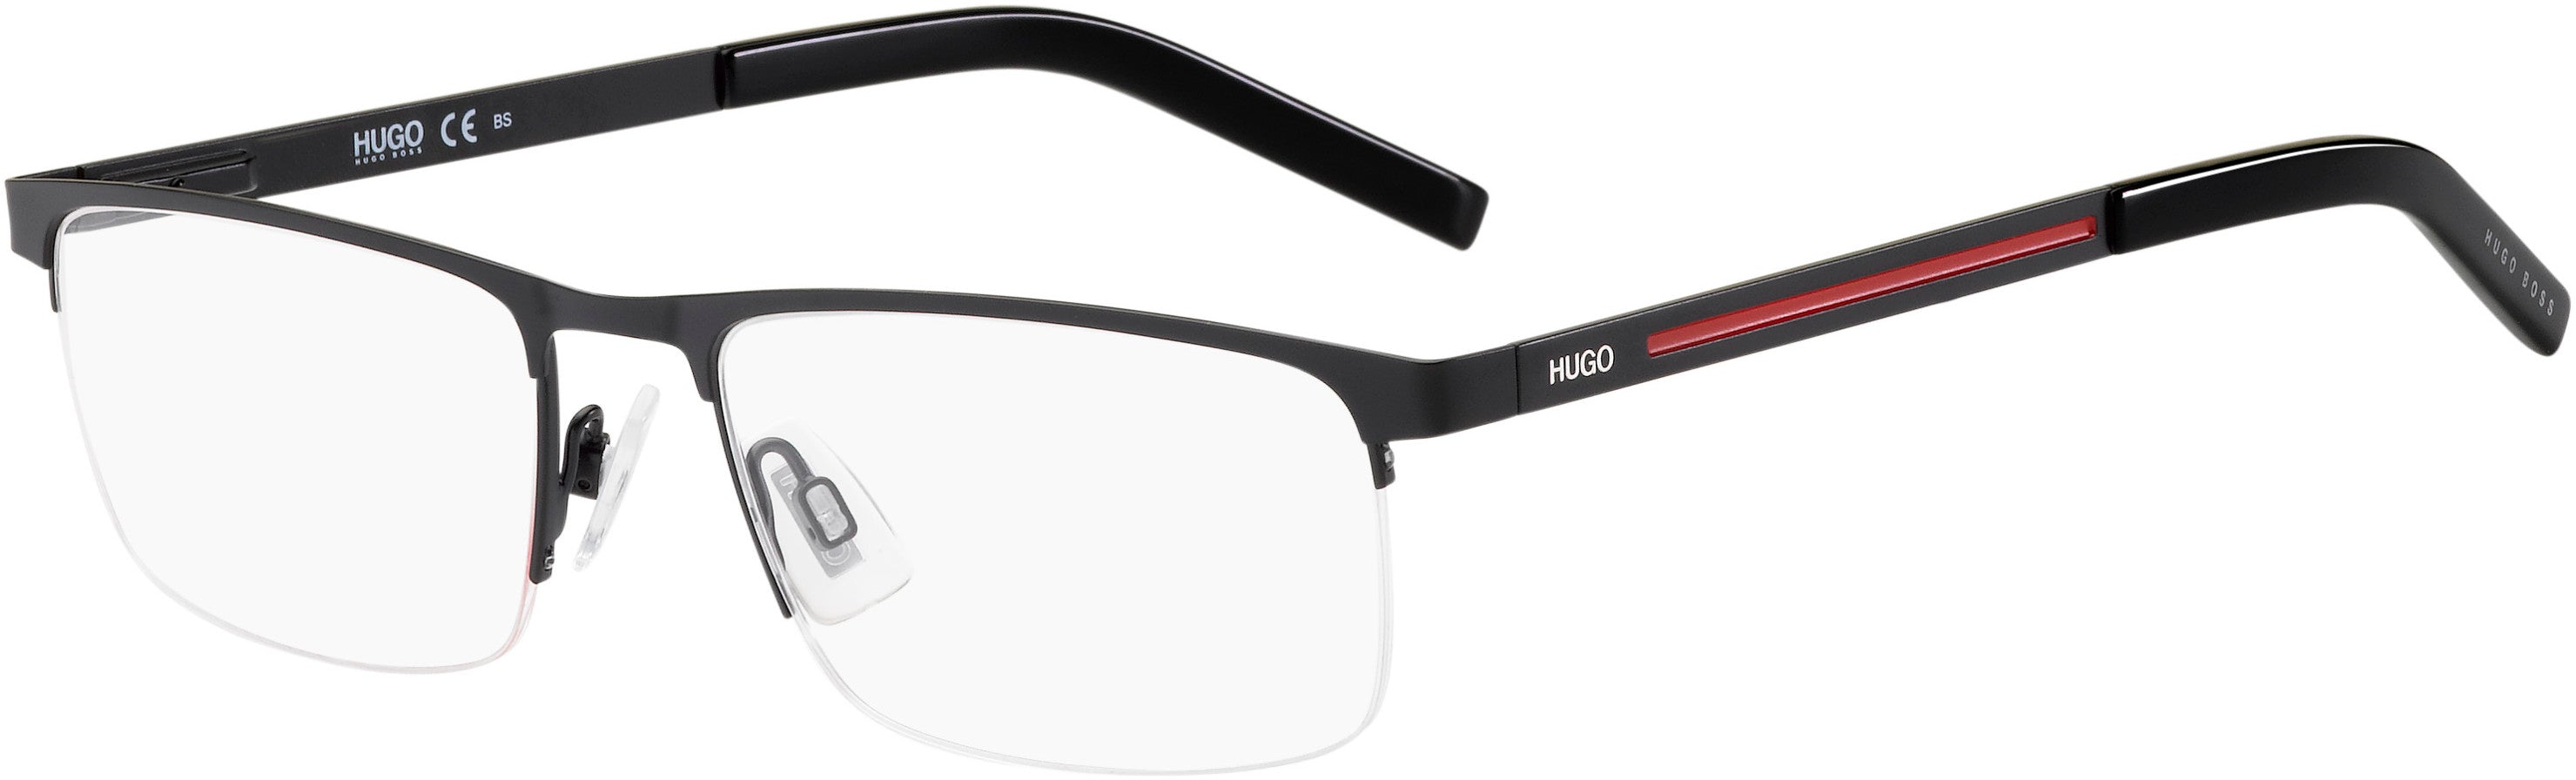 Hugo (hug) Hugo 1117 Square Eyeglasses 0003-0003  Matte Black (00 Demo Lens)